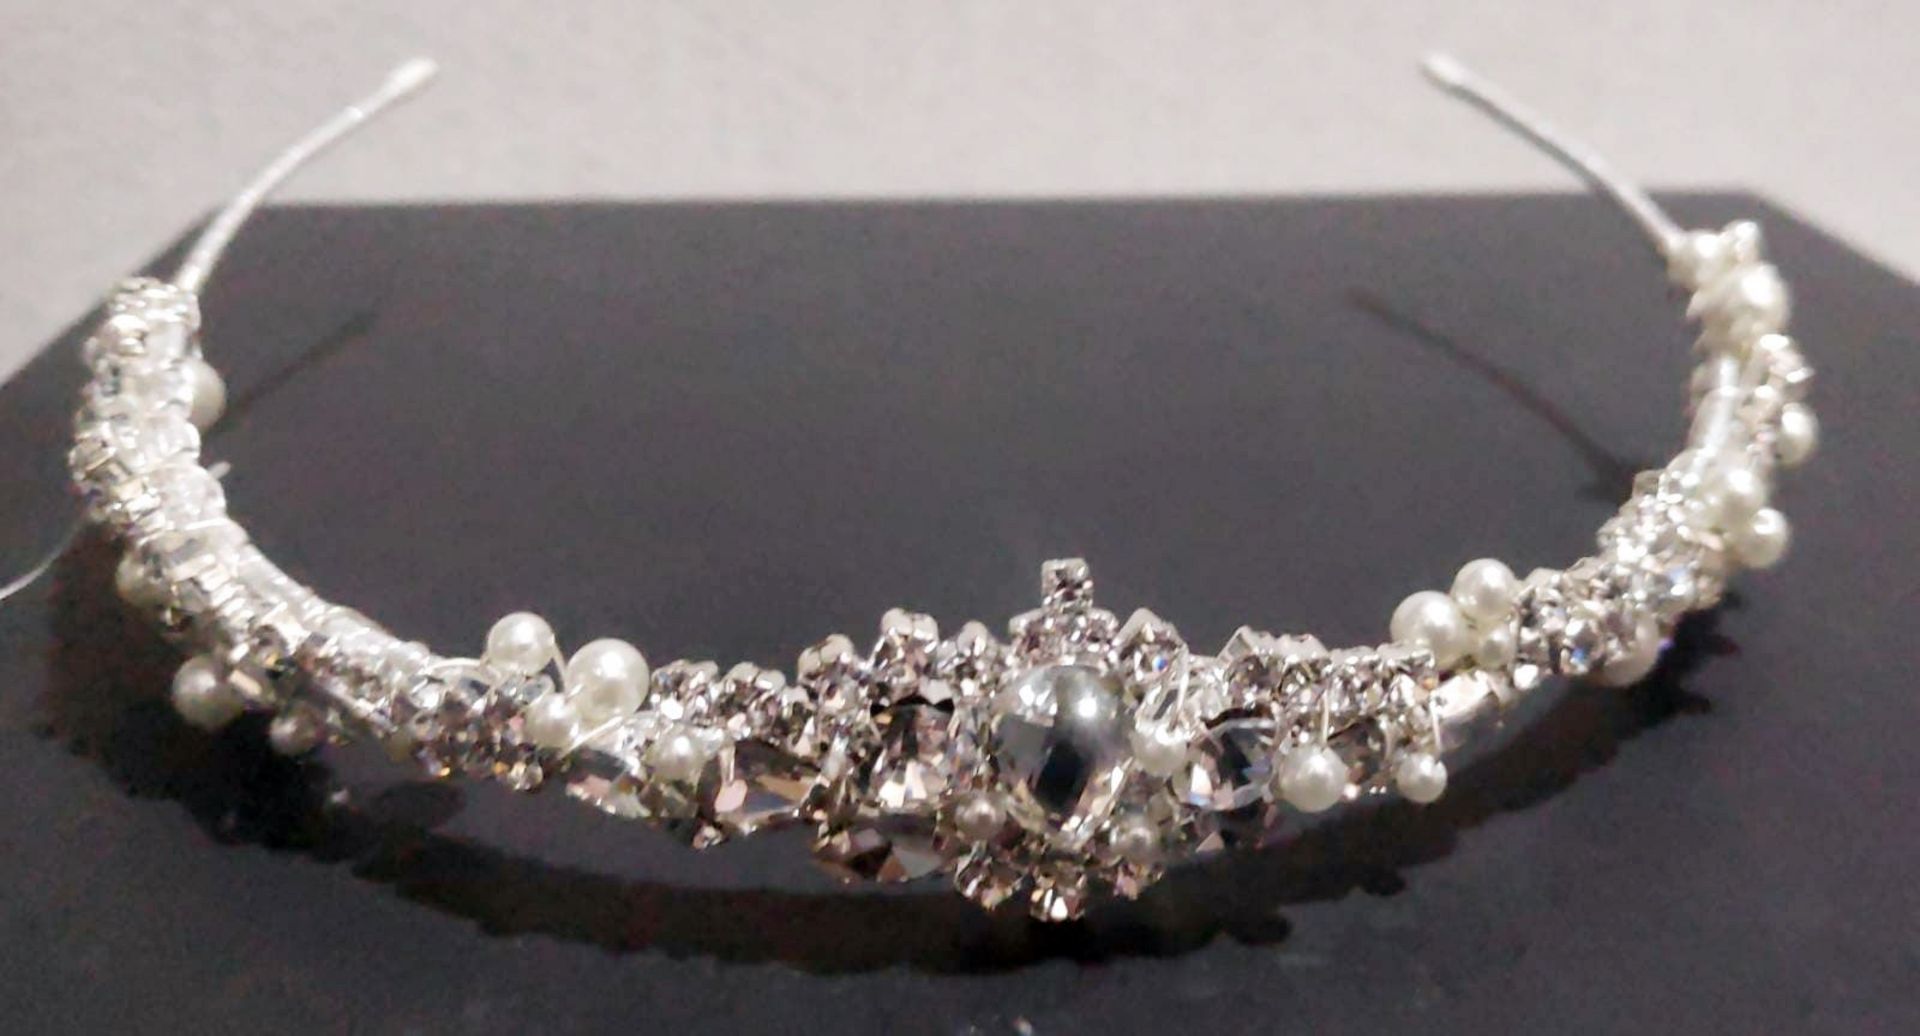 1 x Richard Designs Glamorous Silver, Crystal & Pearl Bridal Headband Tiara (TR2656A) - RRP £112.50 - Image 7 of 9